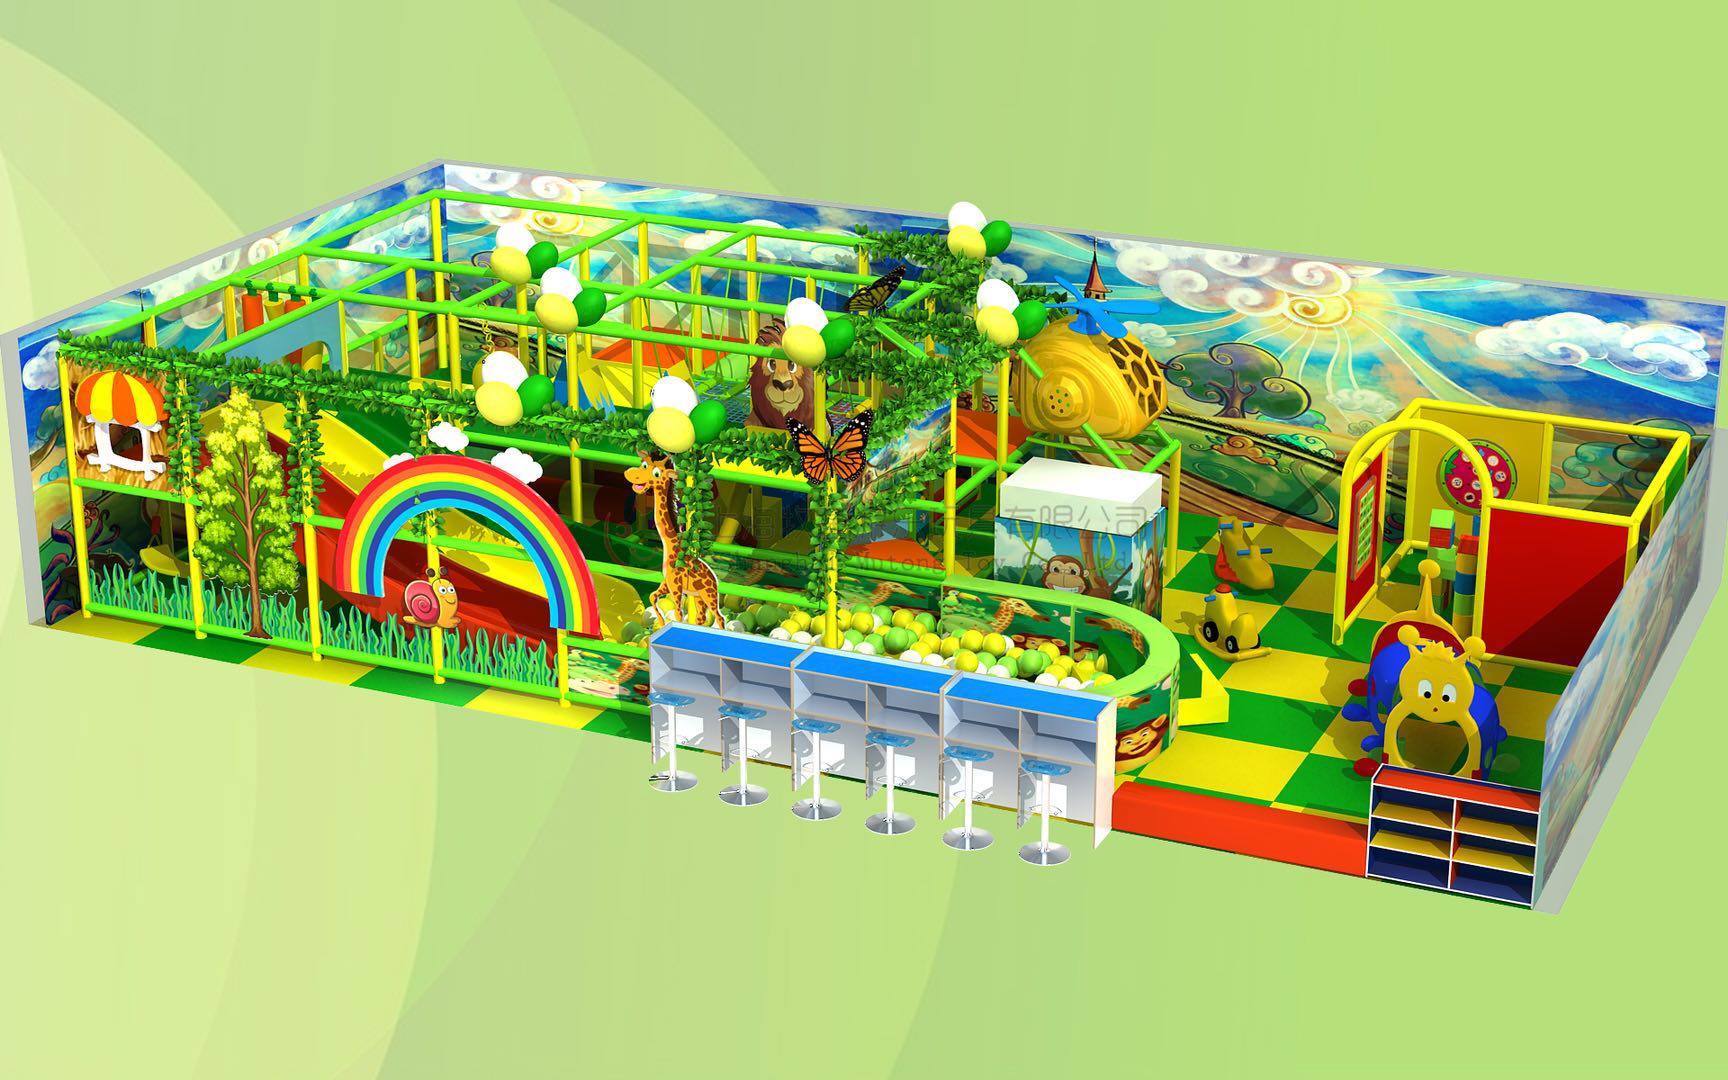 Plastic indoor playground equipment prices, kids’ toys indoor playground Featured Image